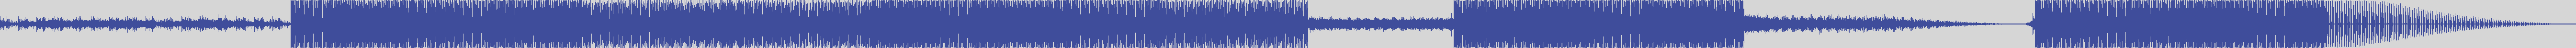 atomic_recordings [AR013] Aumrec - Big Sur [Original Mix] audio wave form